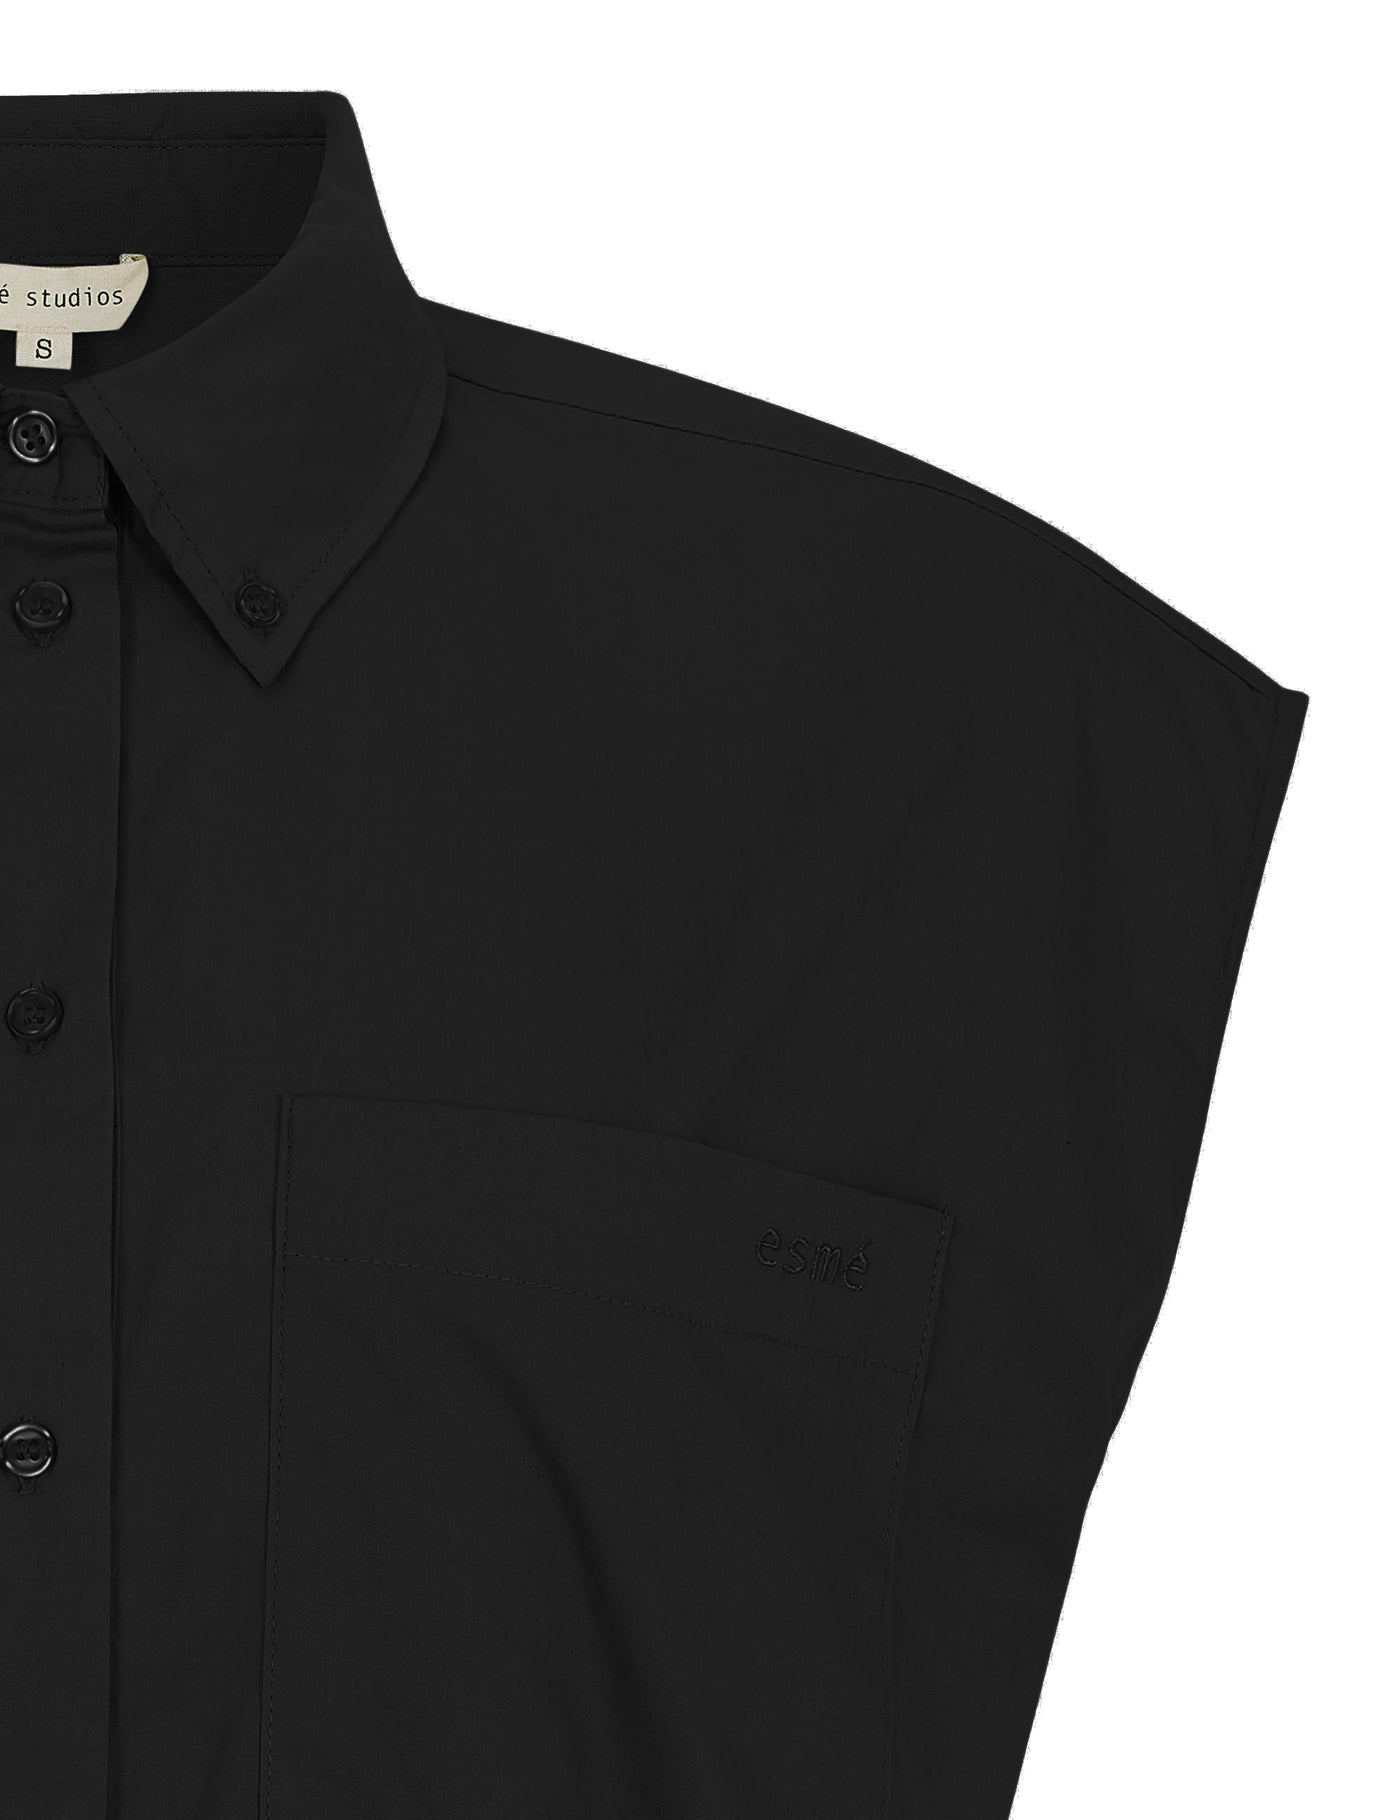 esmé studios Calla Cropped Shirt Shirts & Blouse 001 Black